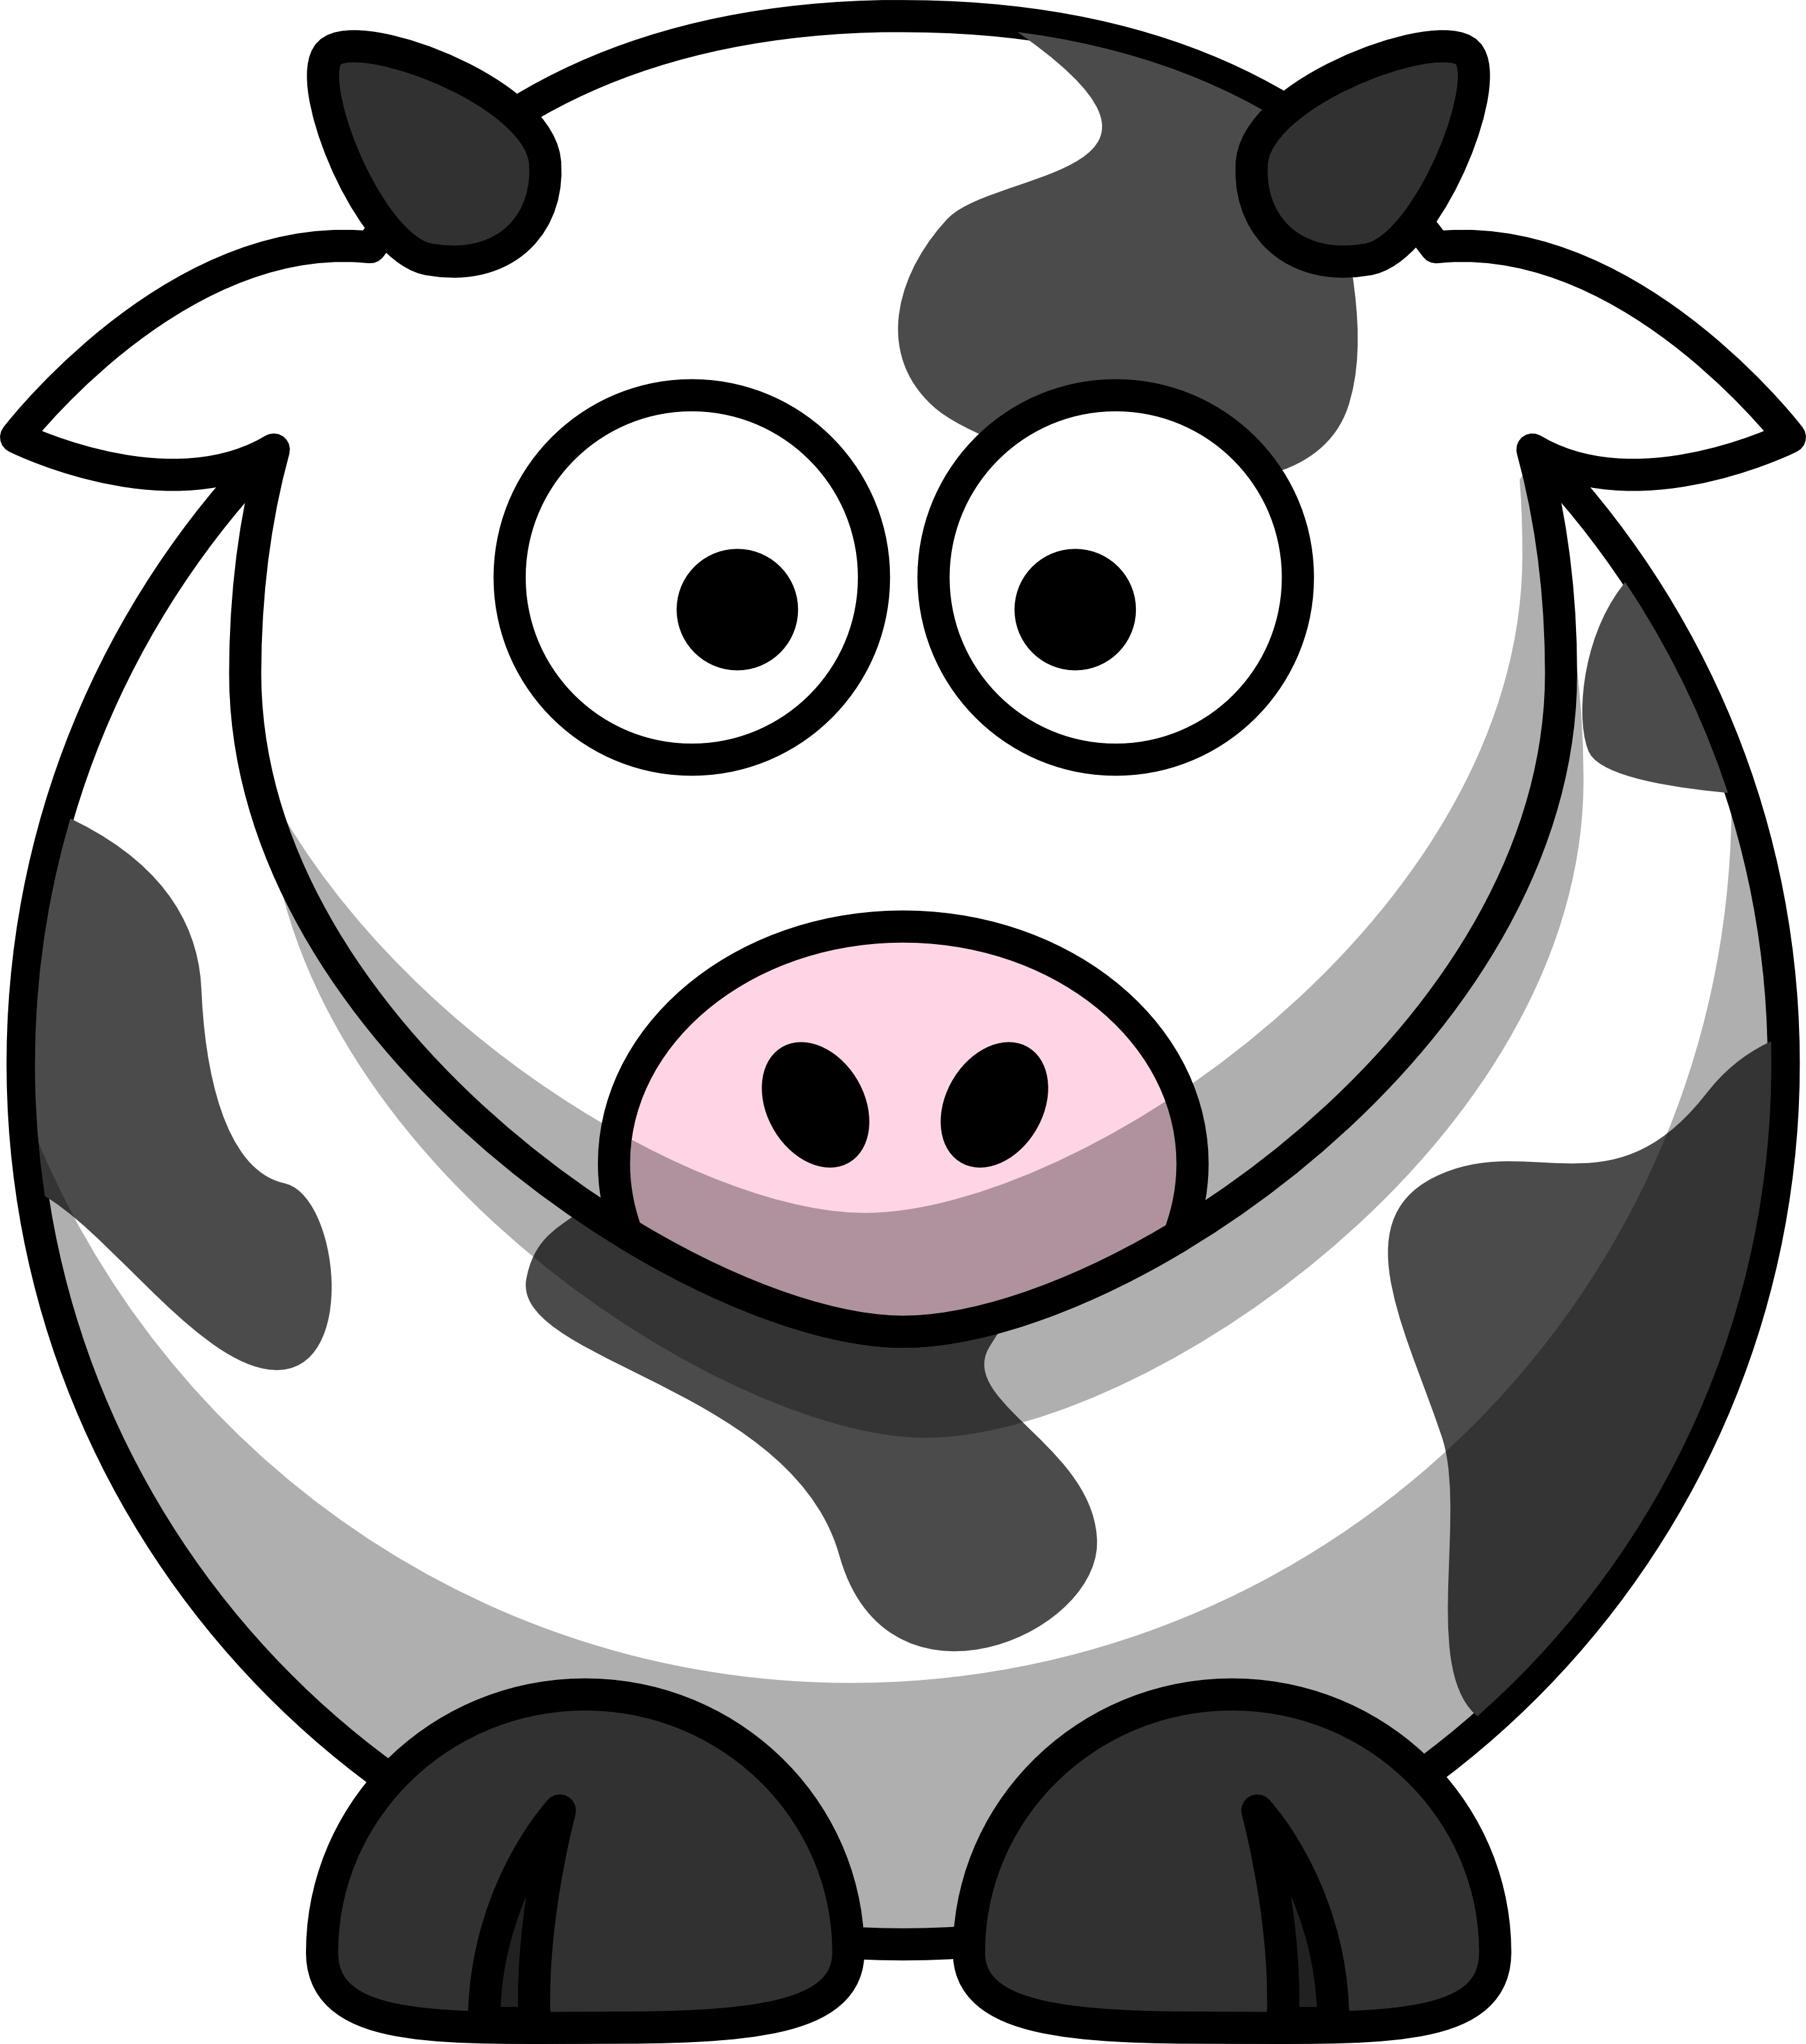 Clipart - Pig, Cow - Clip Art Free Images